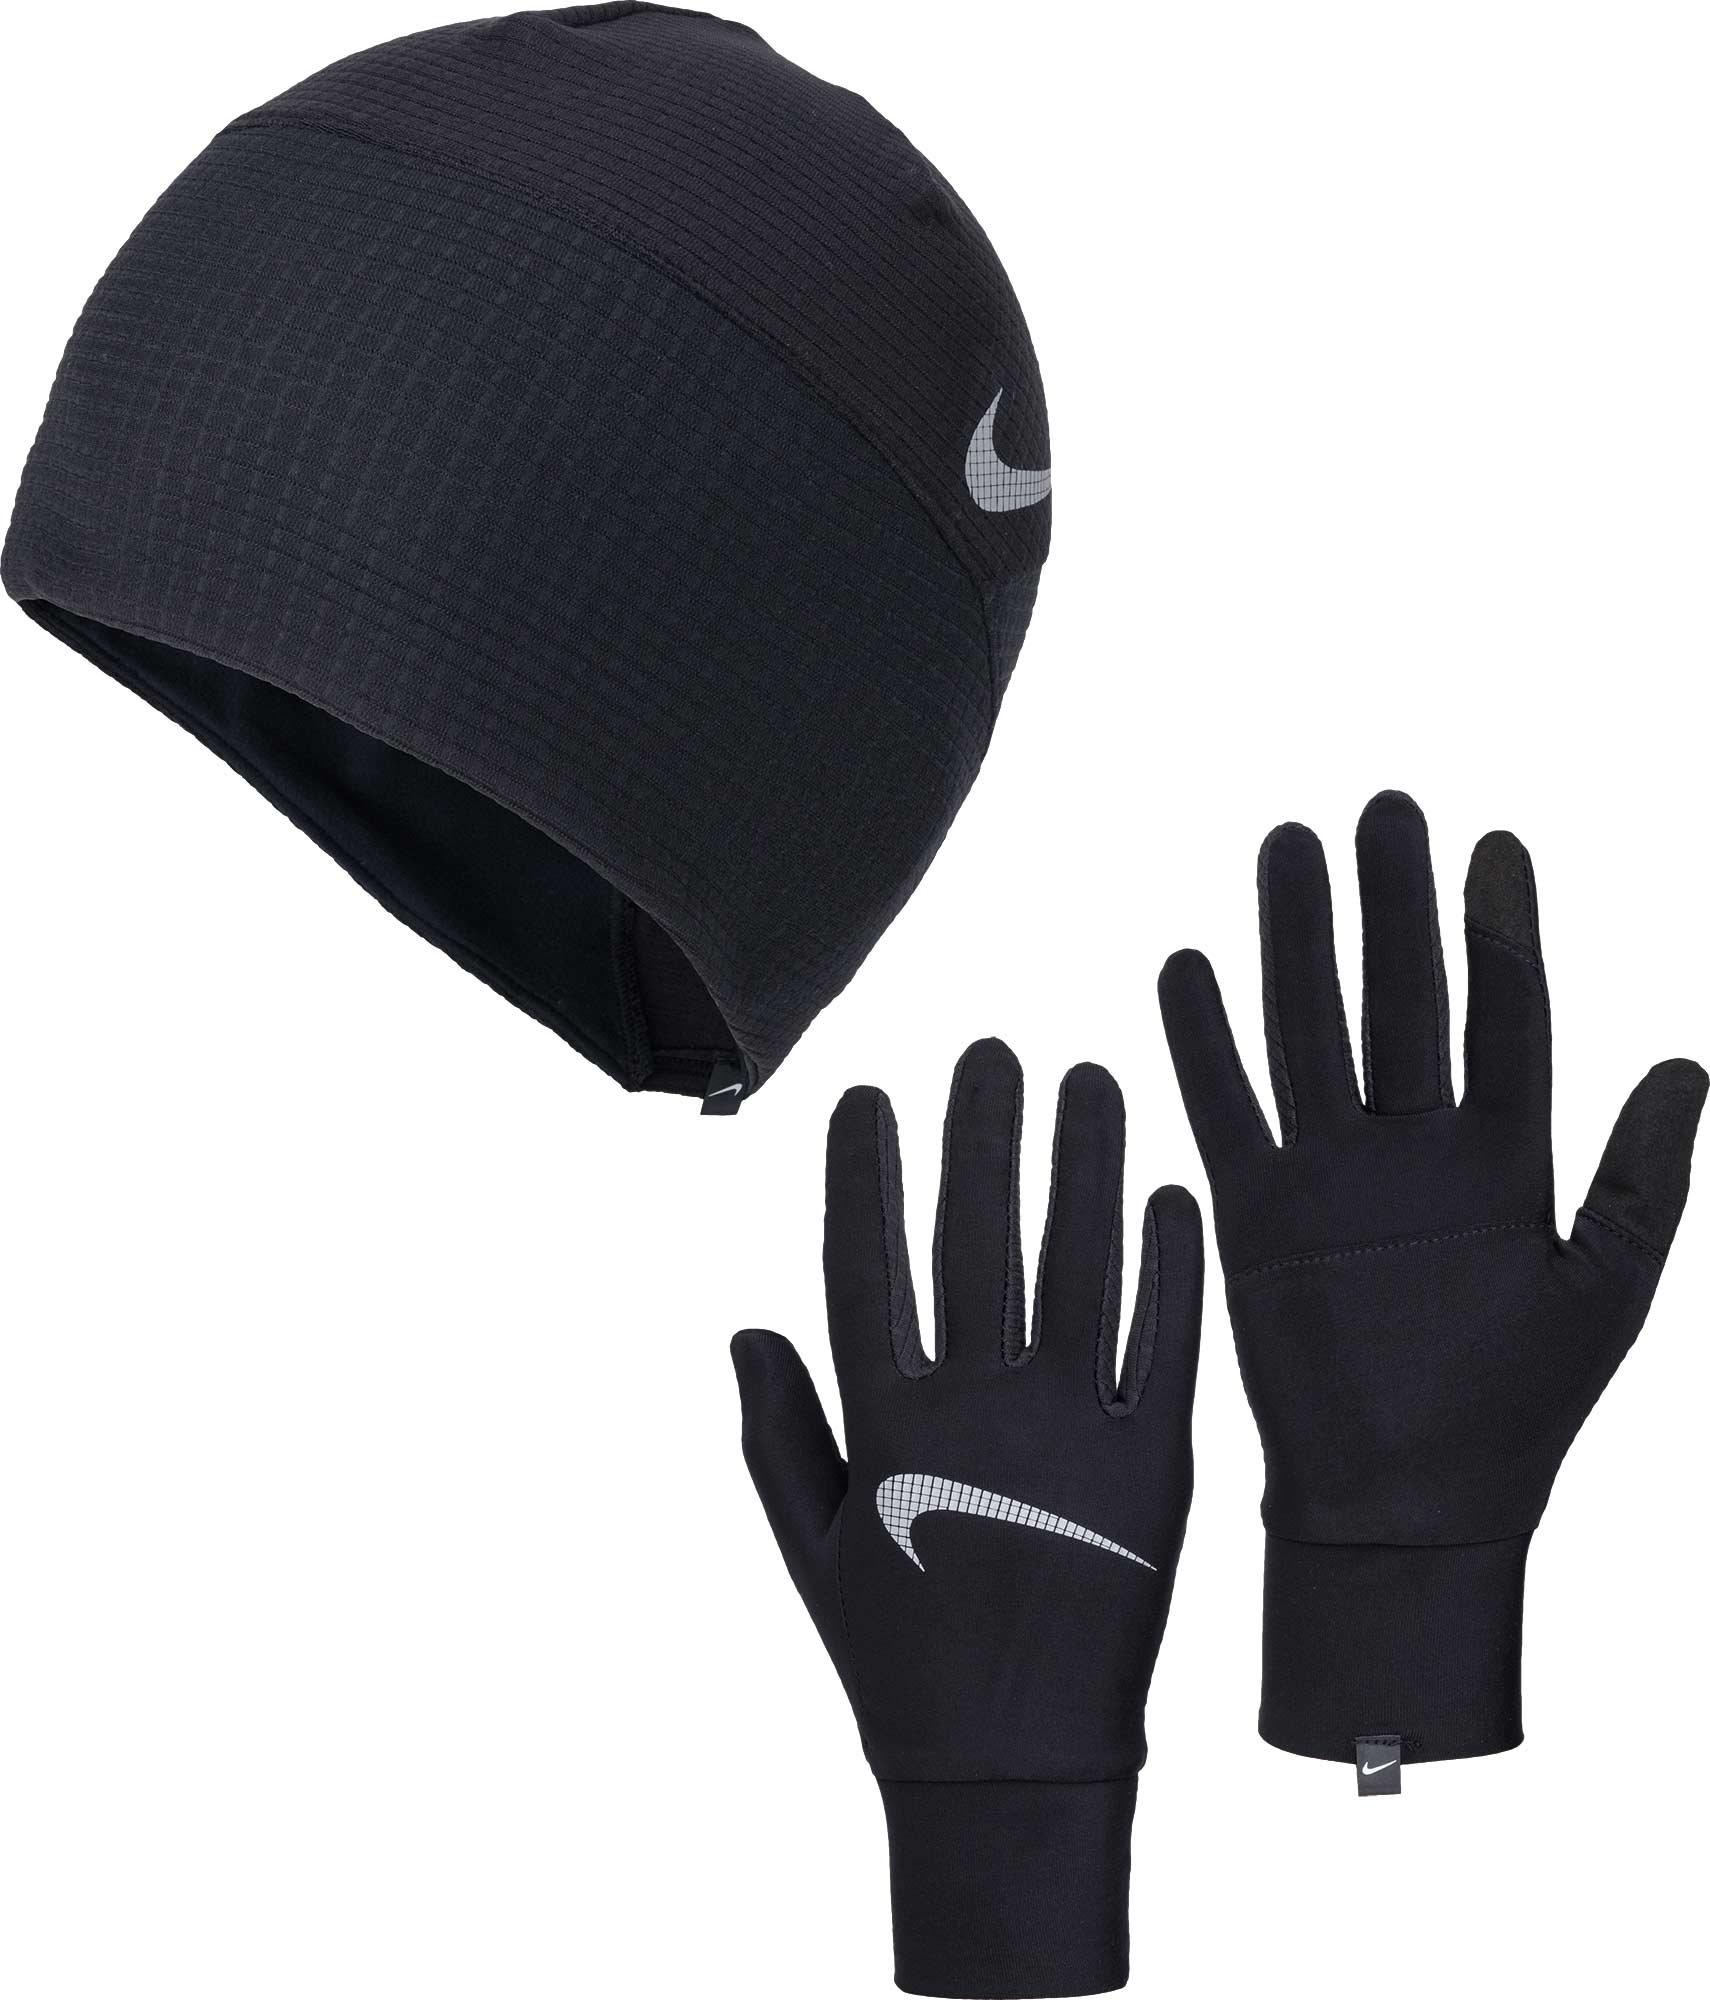 Nike Essential Women's Running Hat and Glove Set.